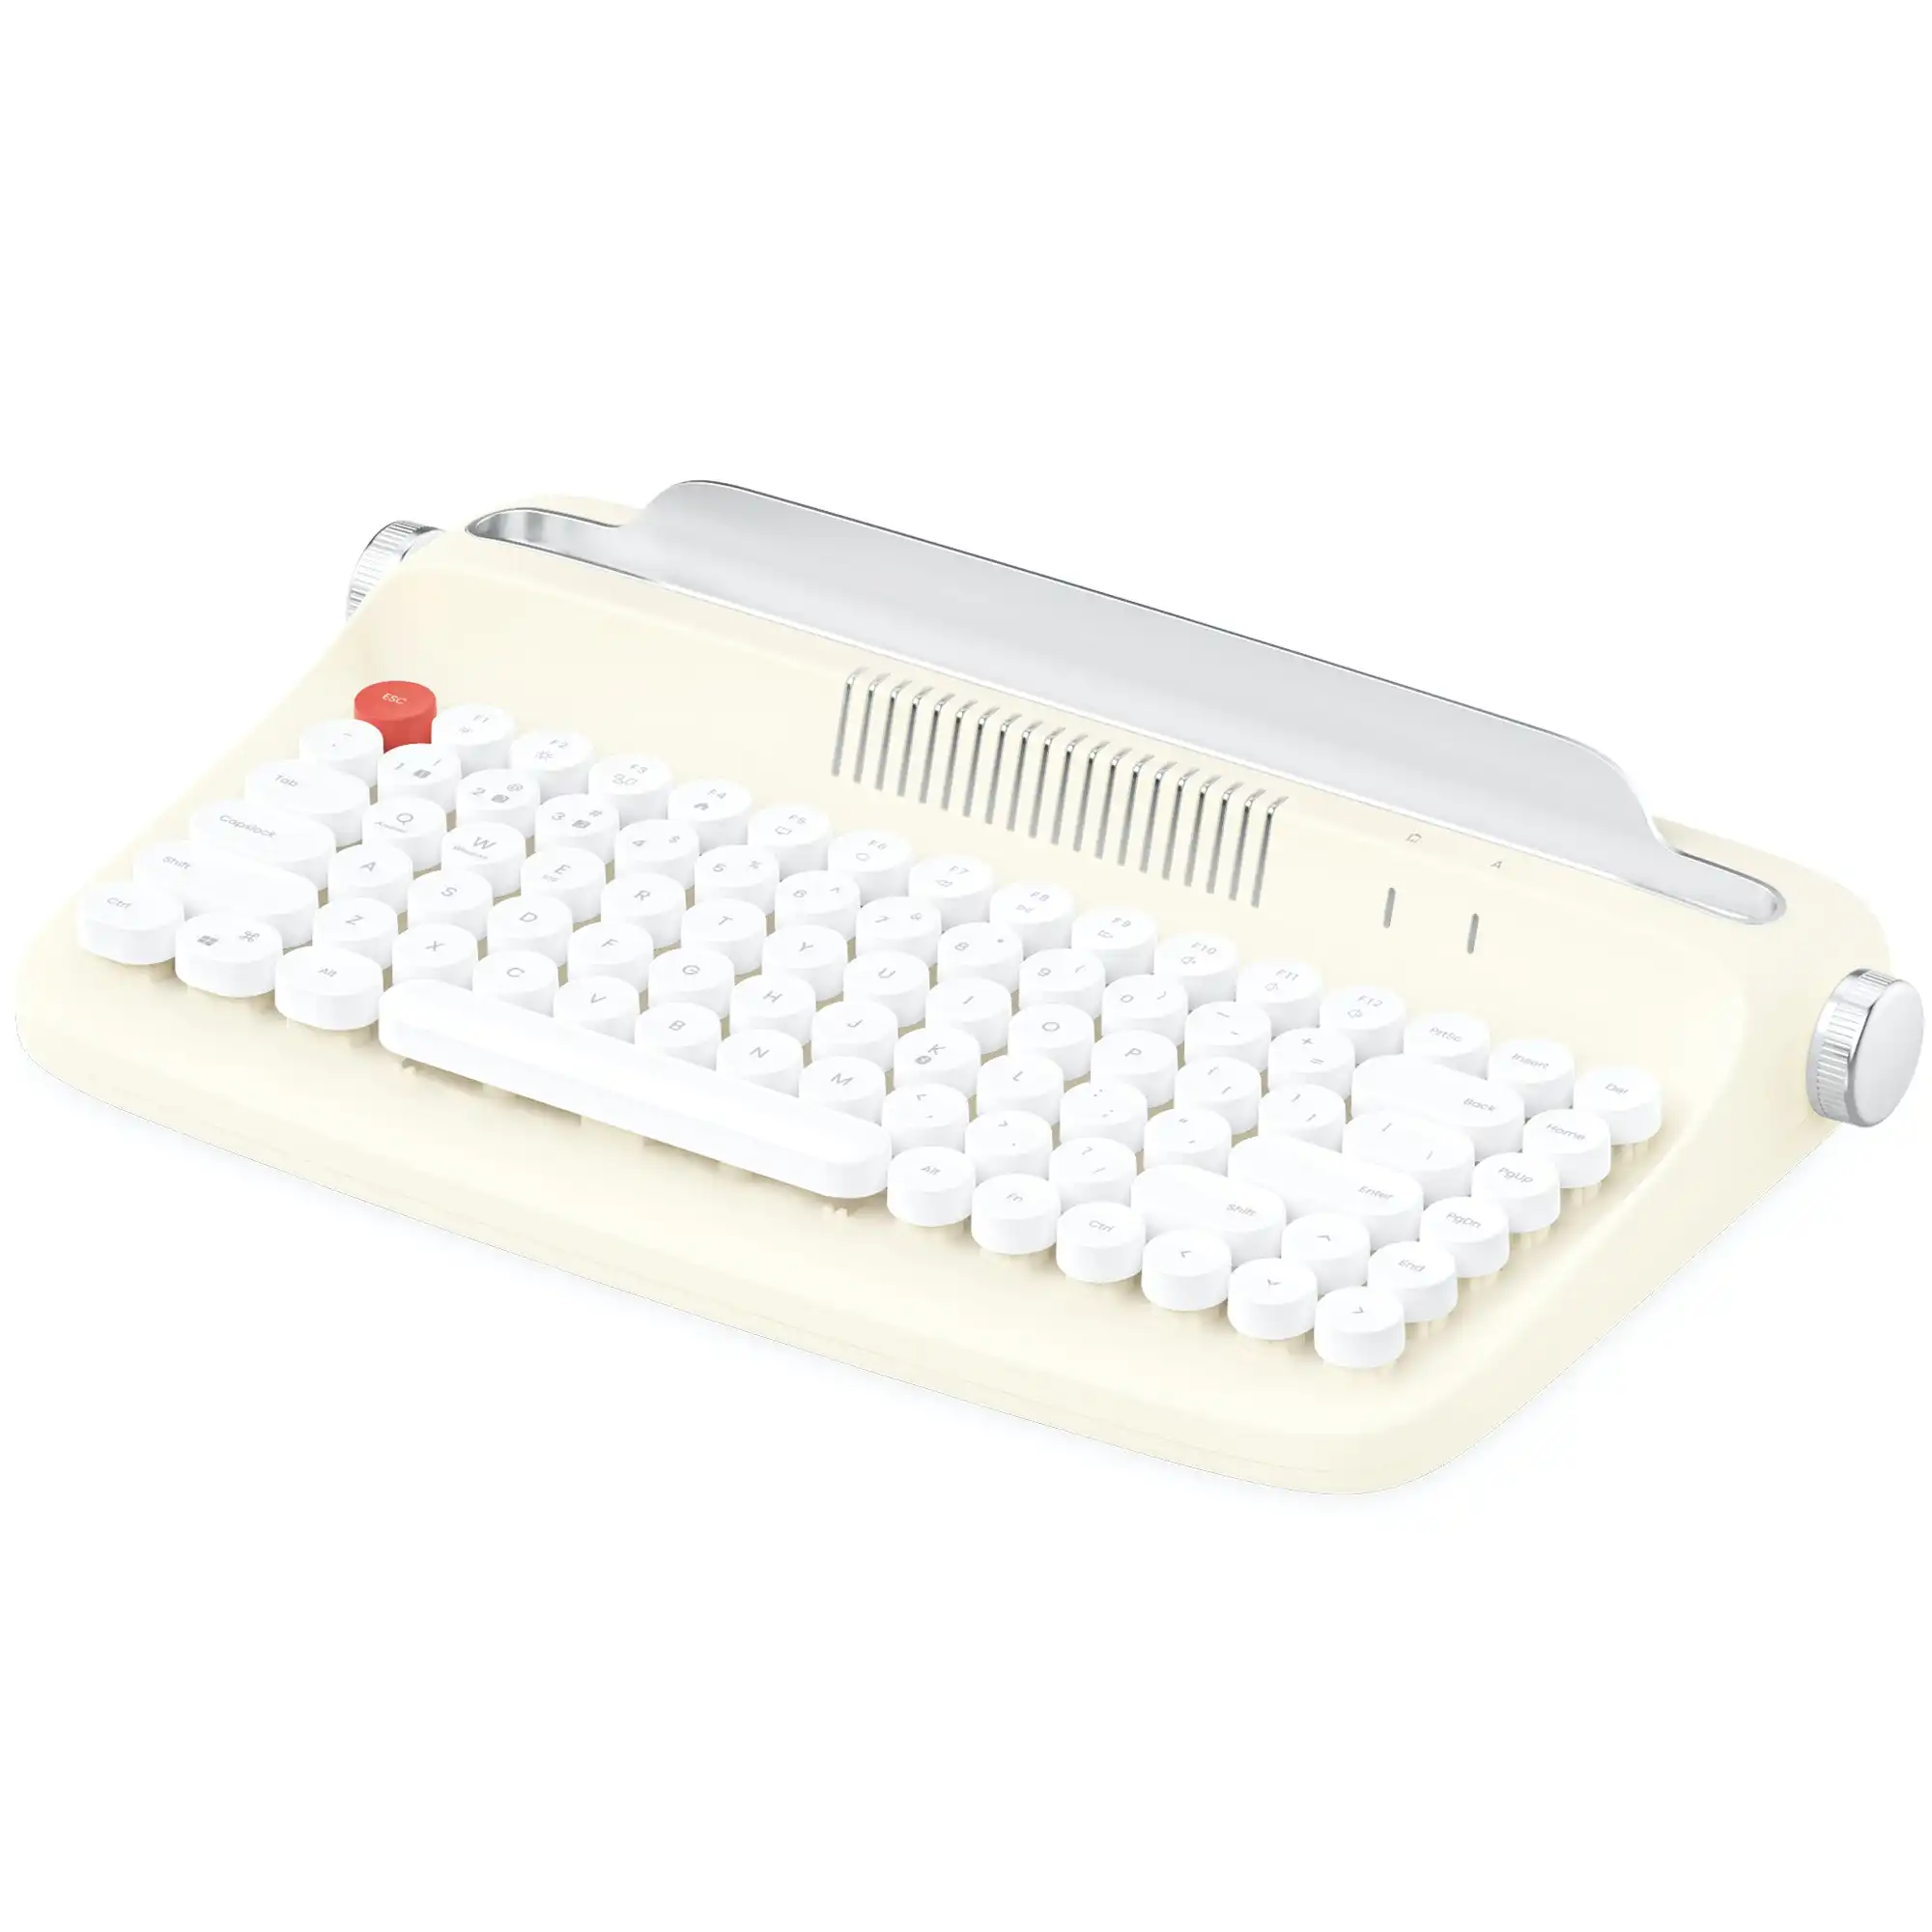 Todo Retro Typewriter Bluetooth Wireless Keyboard Tablet Holder 84 Key Mac Win Android BT 5.0 - Ivory